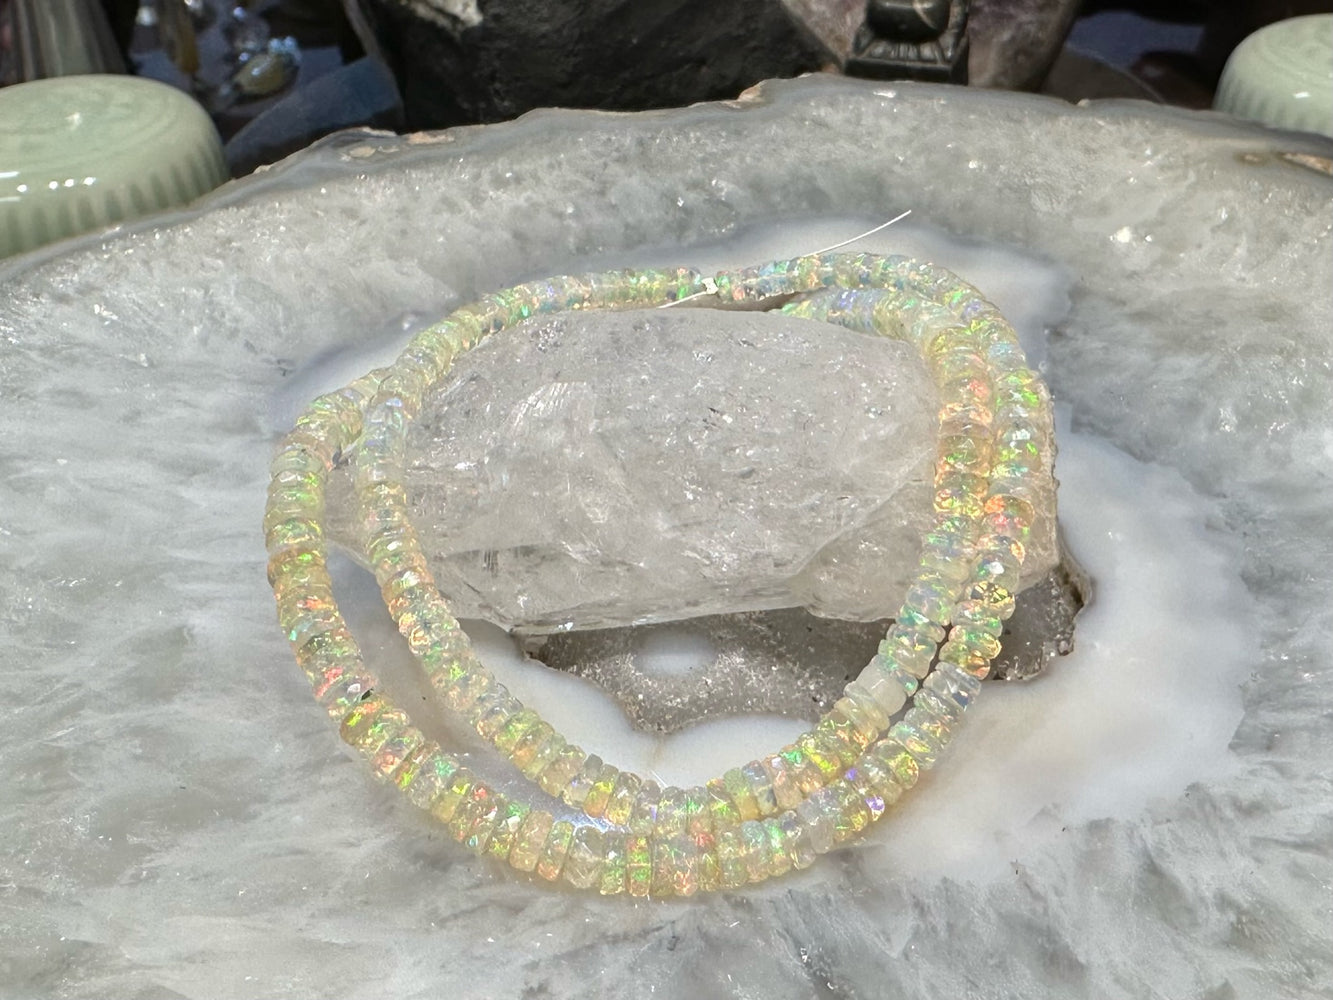 Stunning Ethiopian Heishi fire opal 4-7mm gemstones